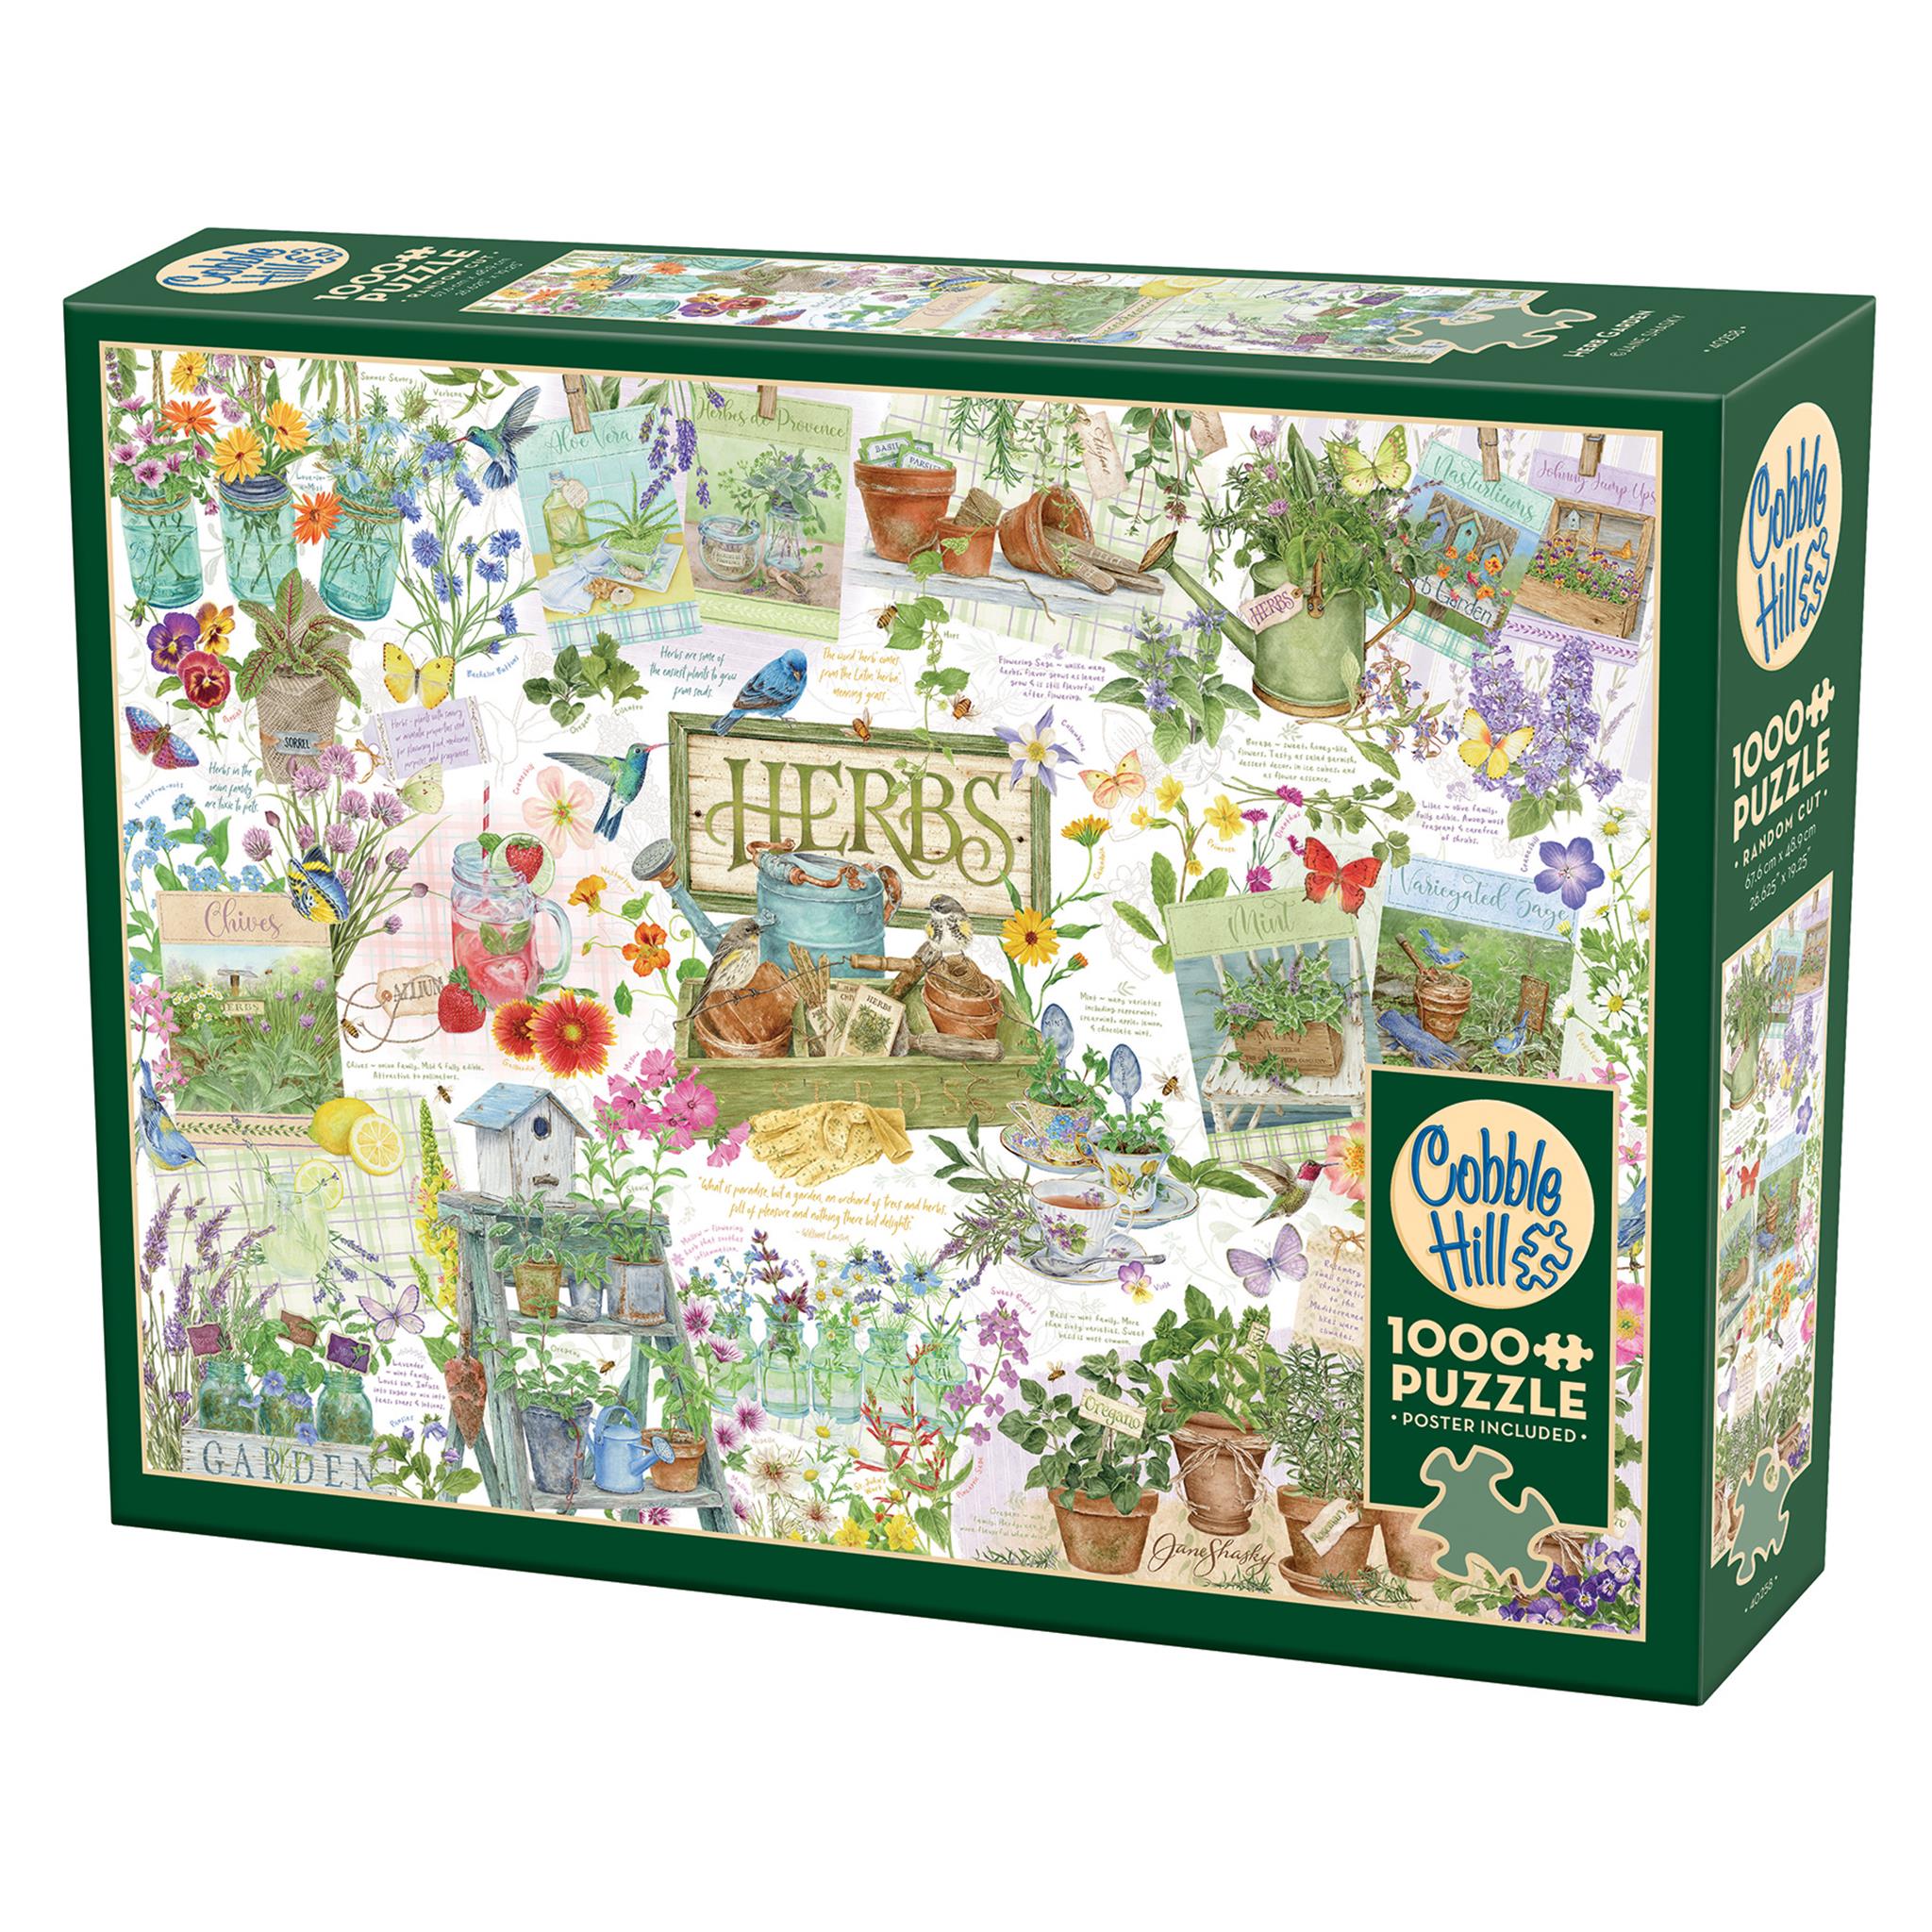 Herb Garden 1000 Piece Puzzle Cobble Hill